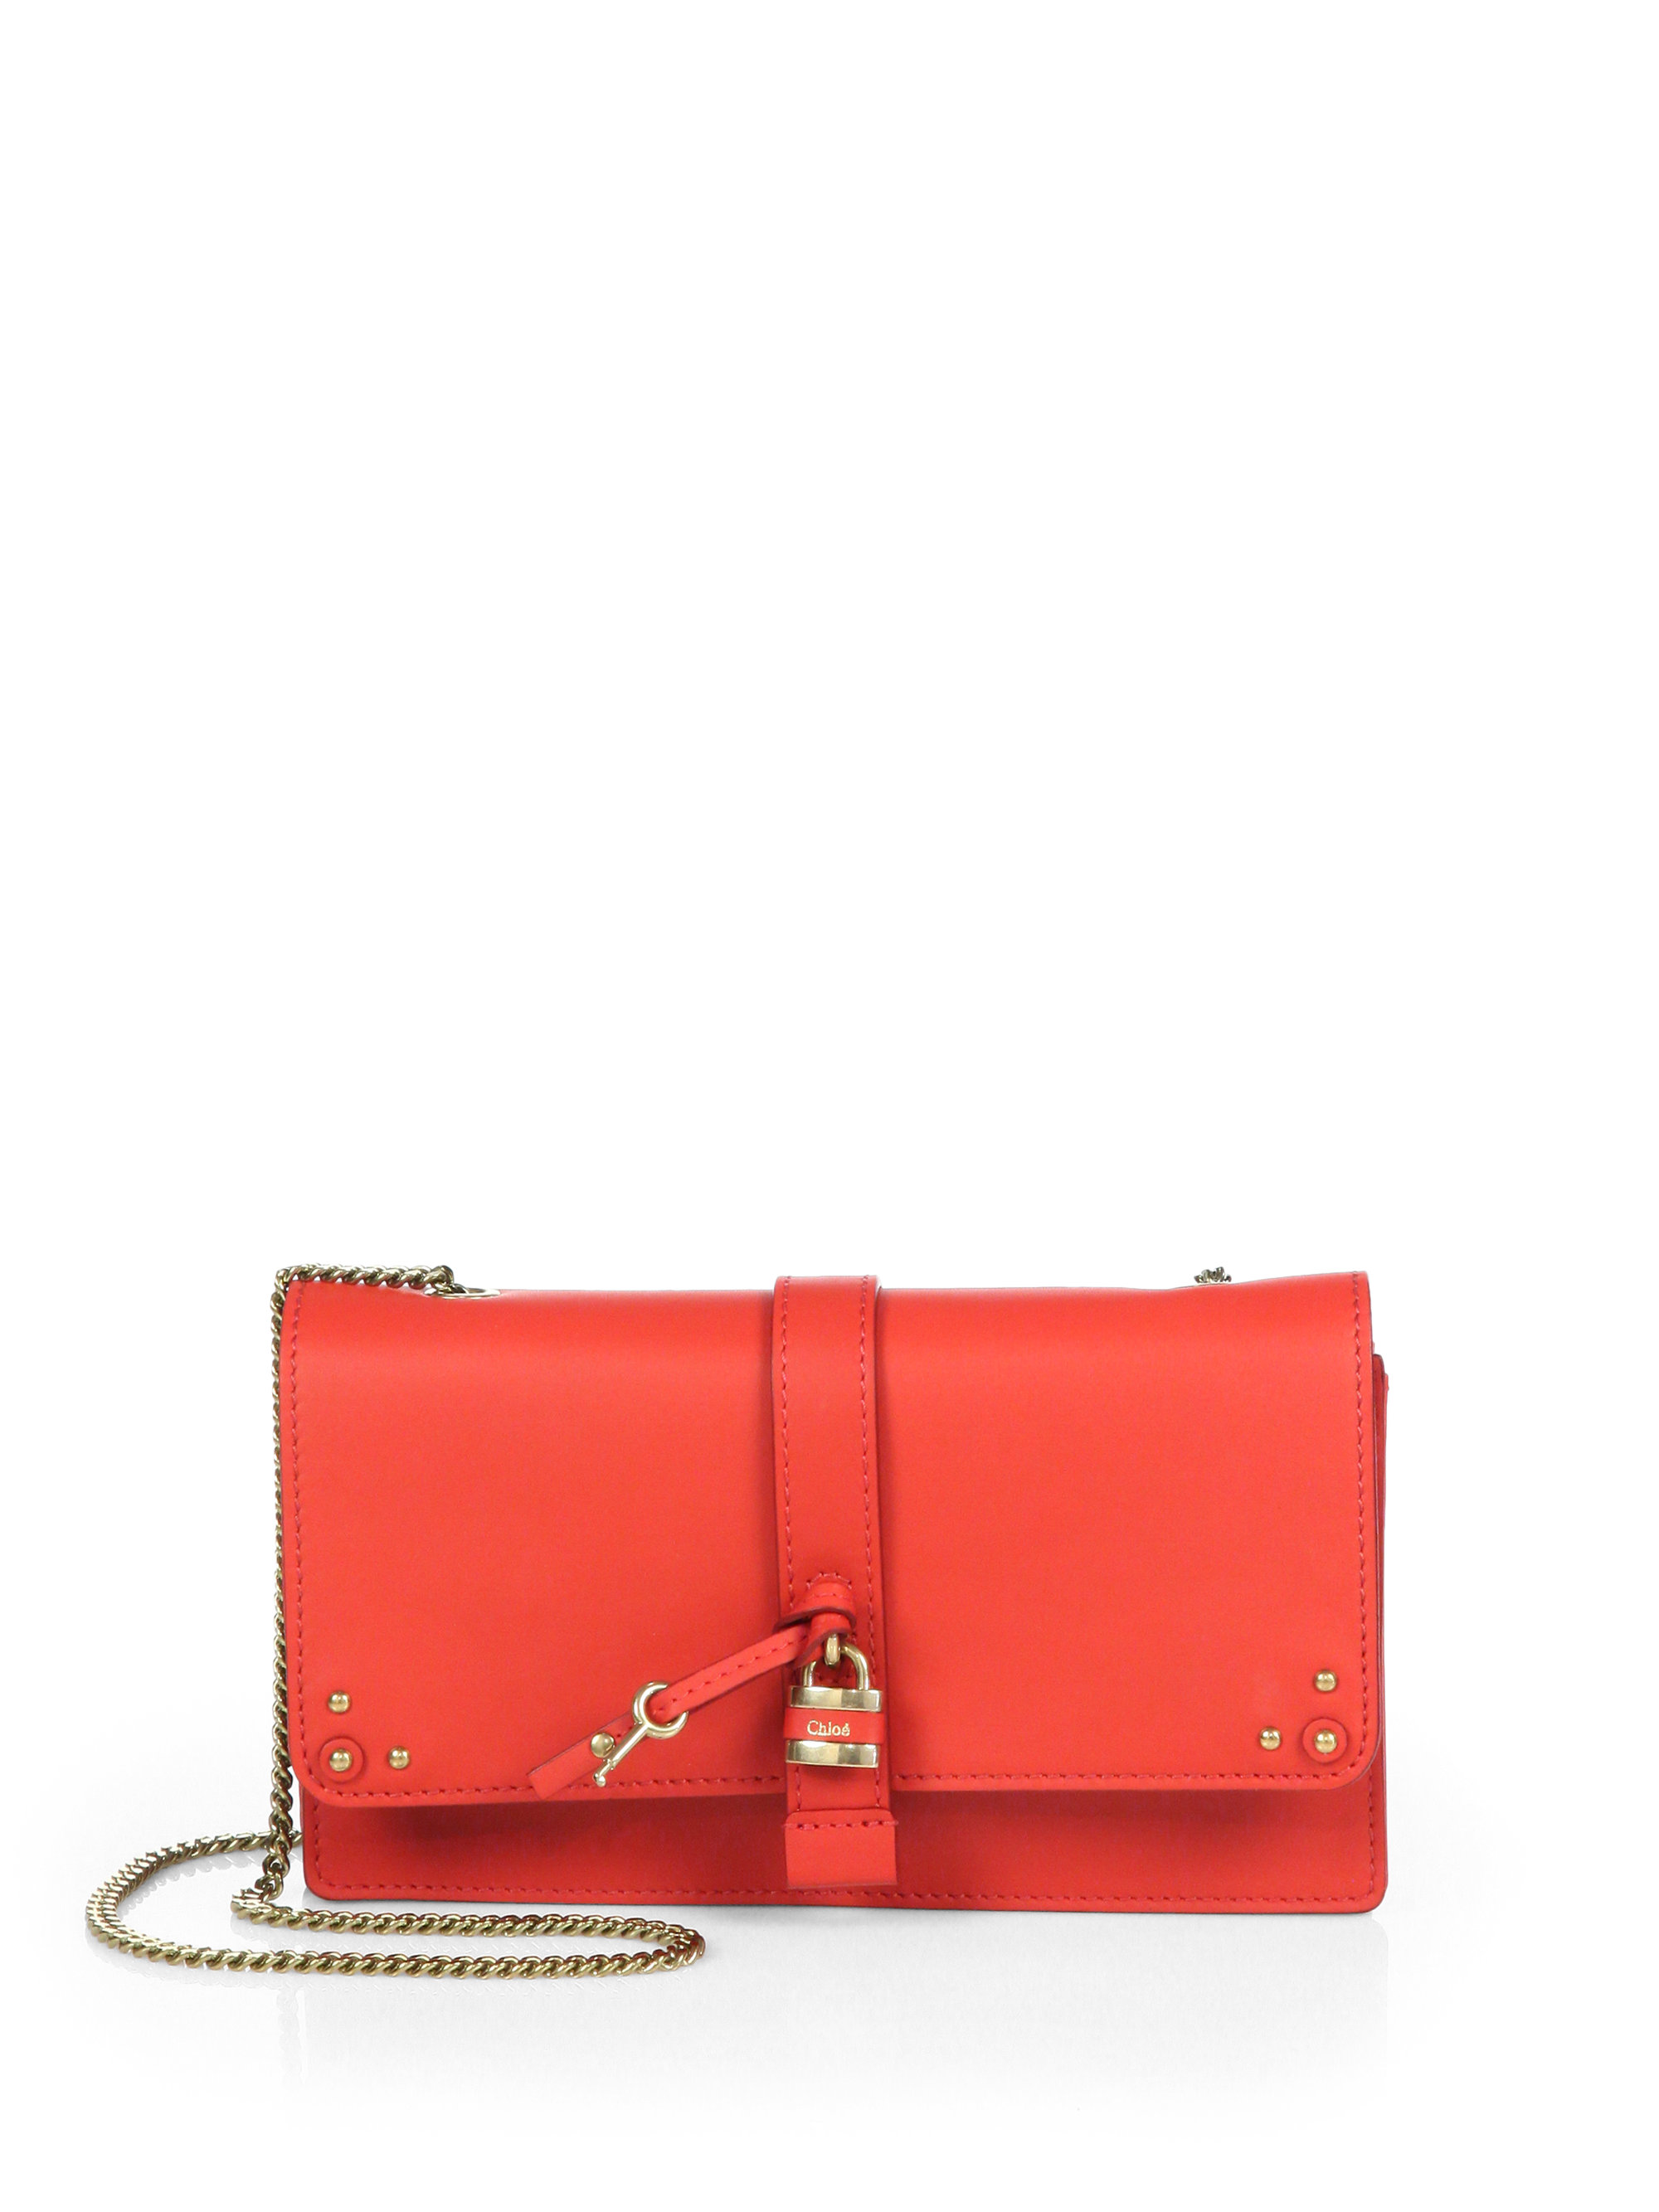 Chloé Aurore Chain Wallet Clutch in Red (CHERRY) | Lyst